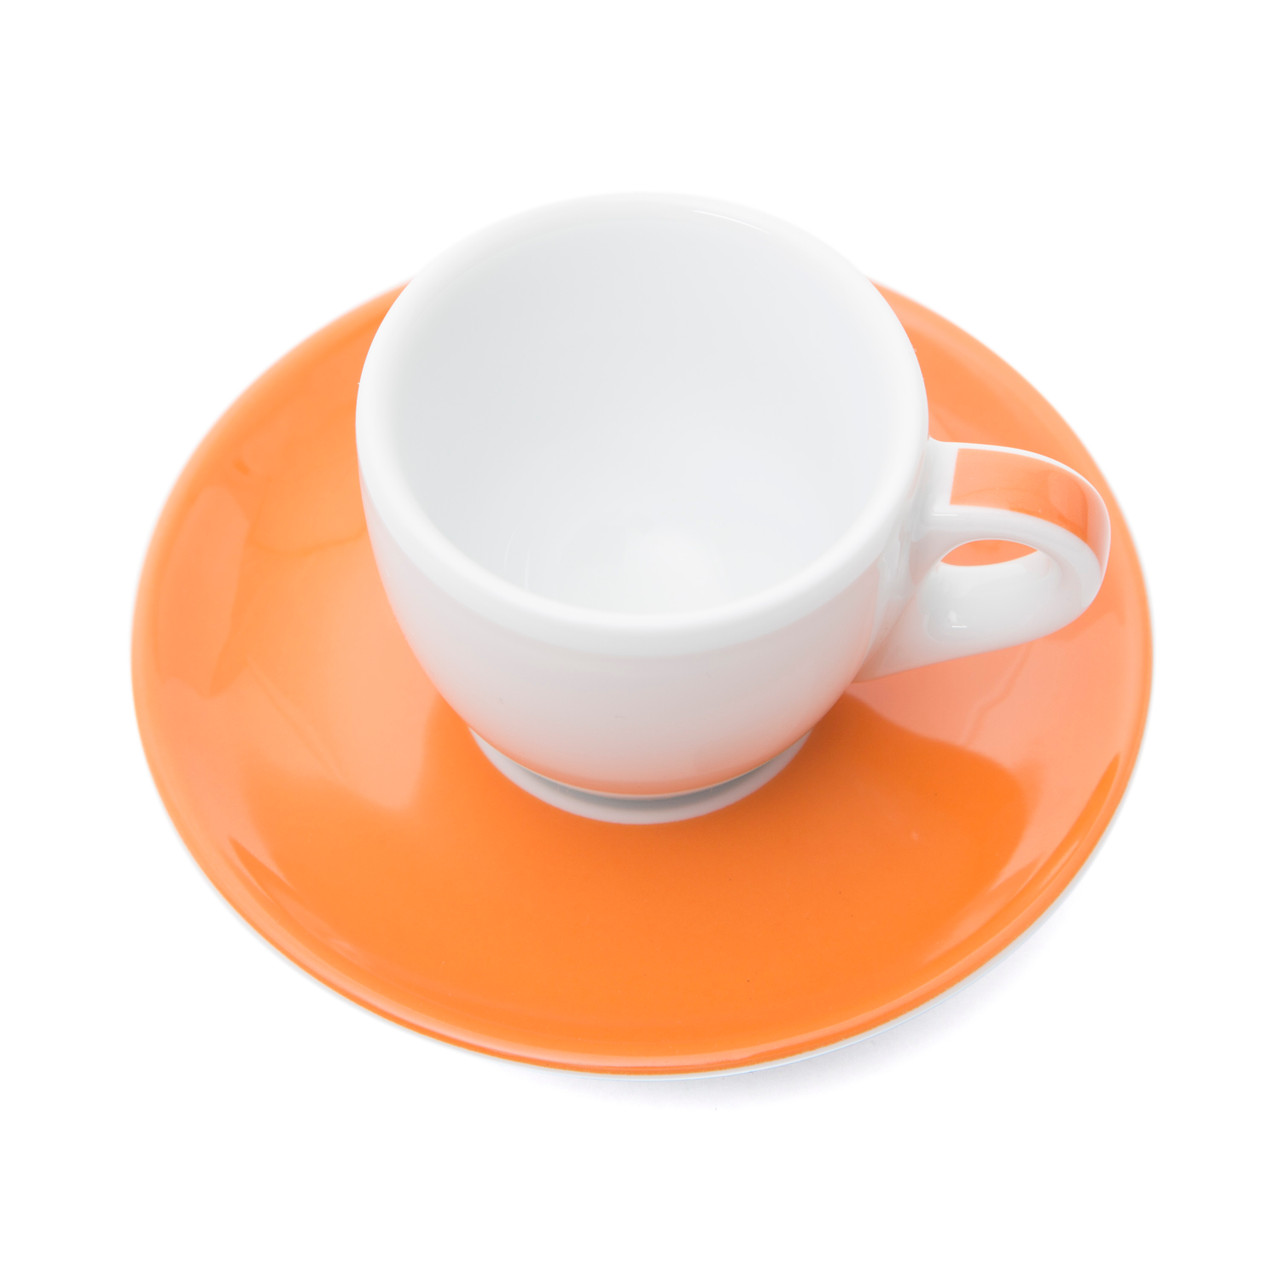 https://cdn11.bigcommerce.com/s-qnui5gocu2/images/stencil/1280x1280/products/300/1150/Angle-33014-Orange-Striped-Verona-Espresso-Cup-and-Saucer-2.5-oz__16979.1597157771.jpg?c=1&imbypass=on